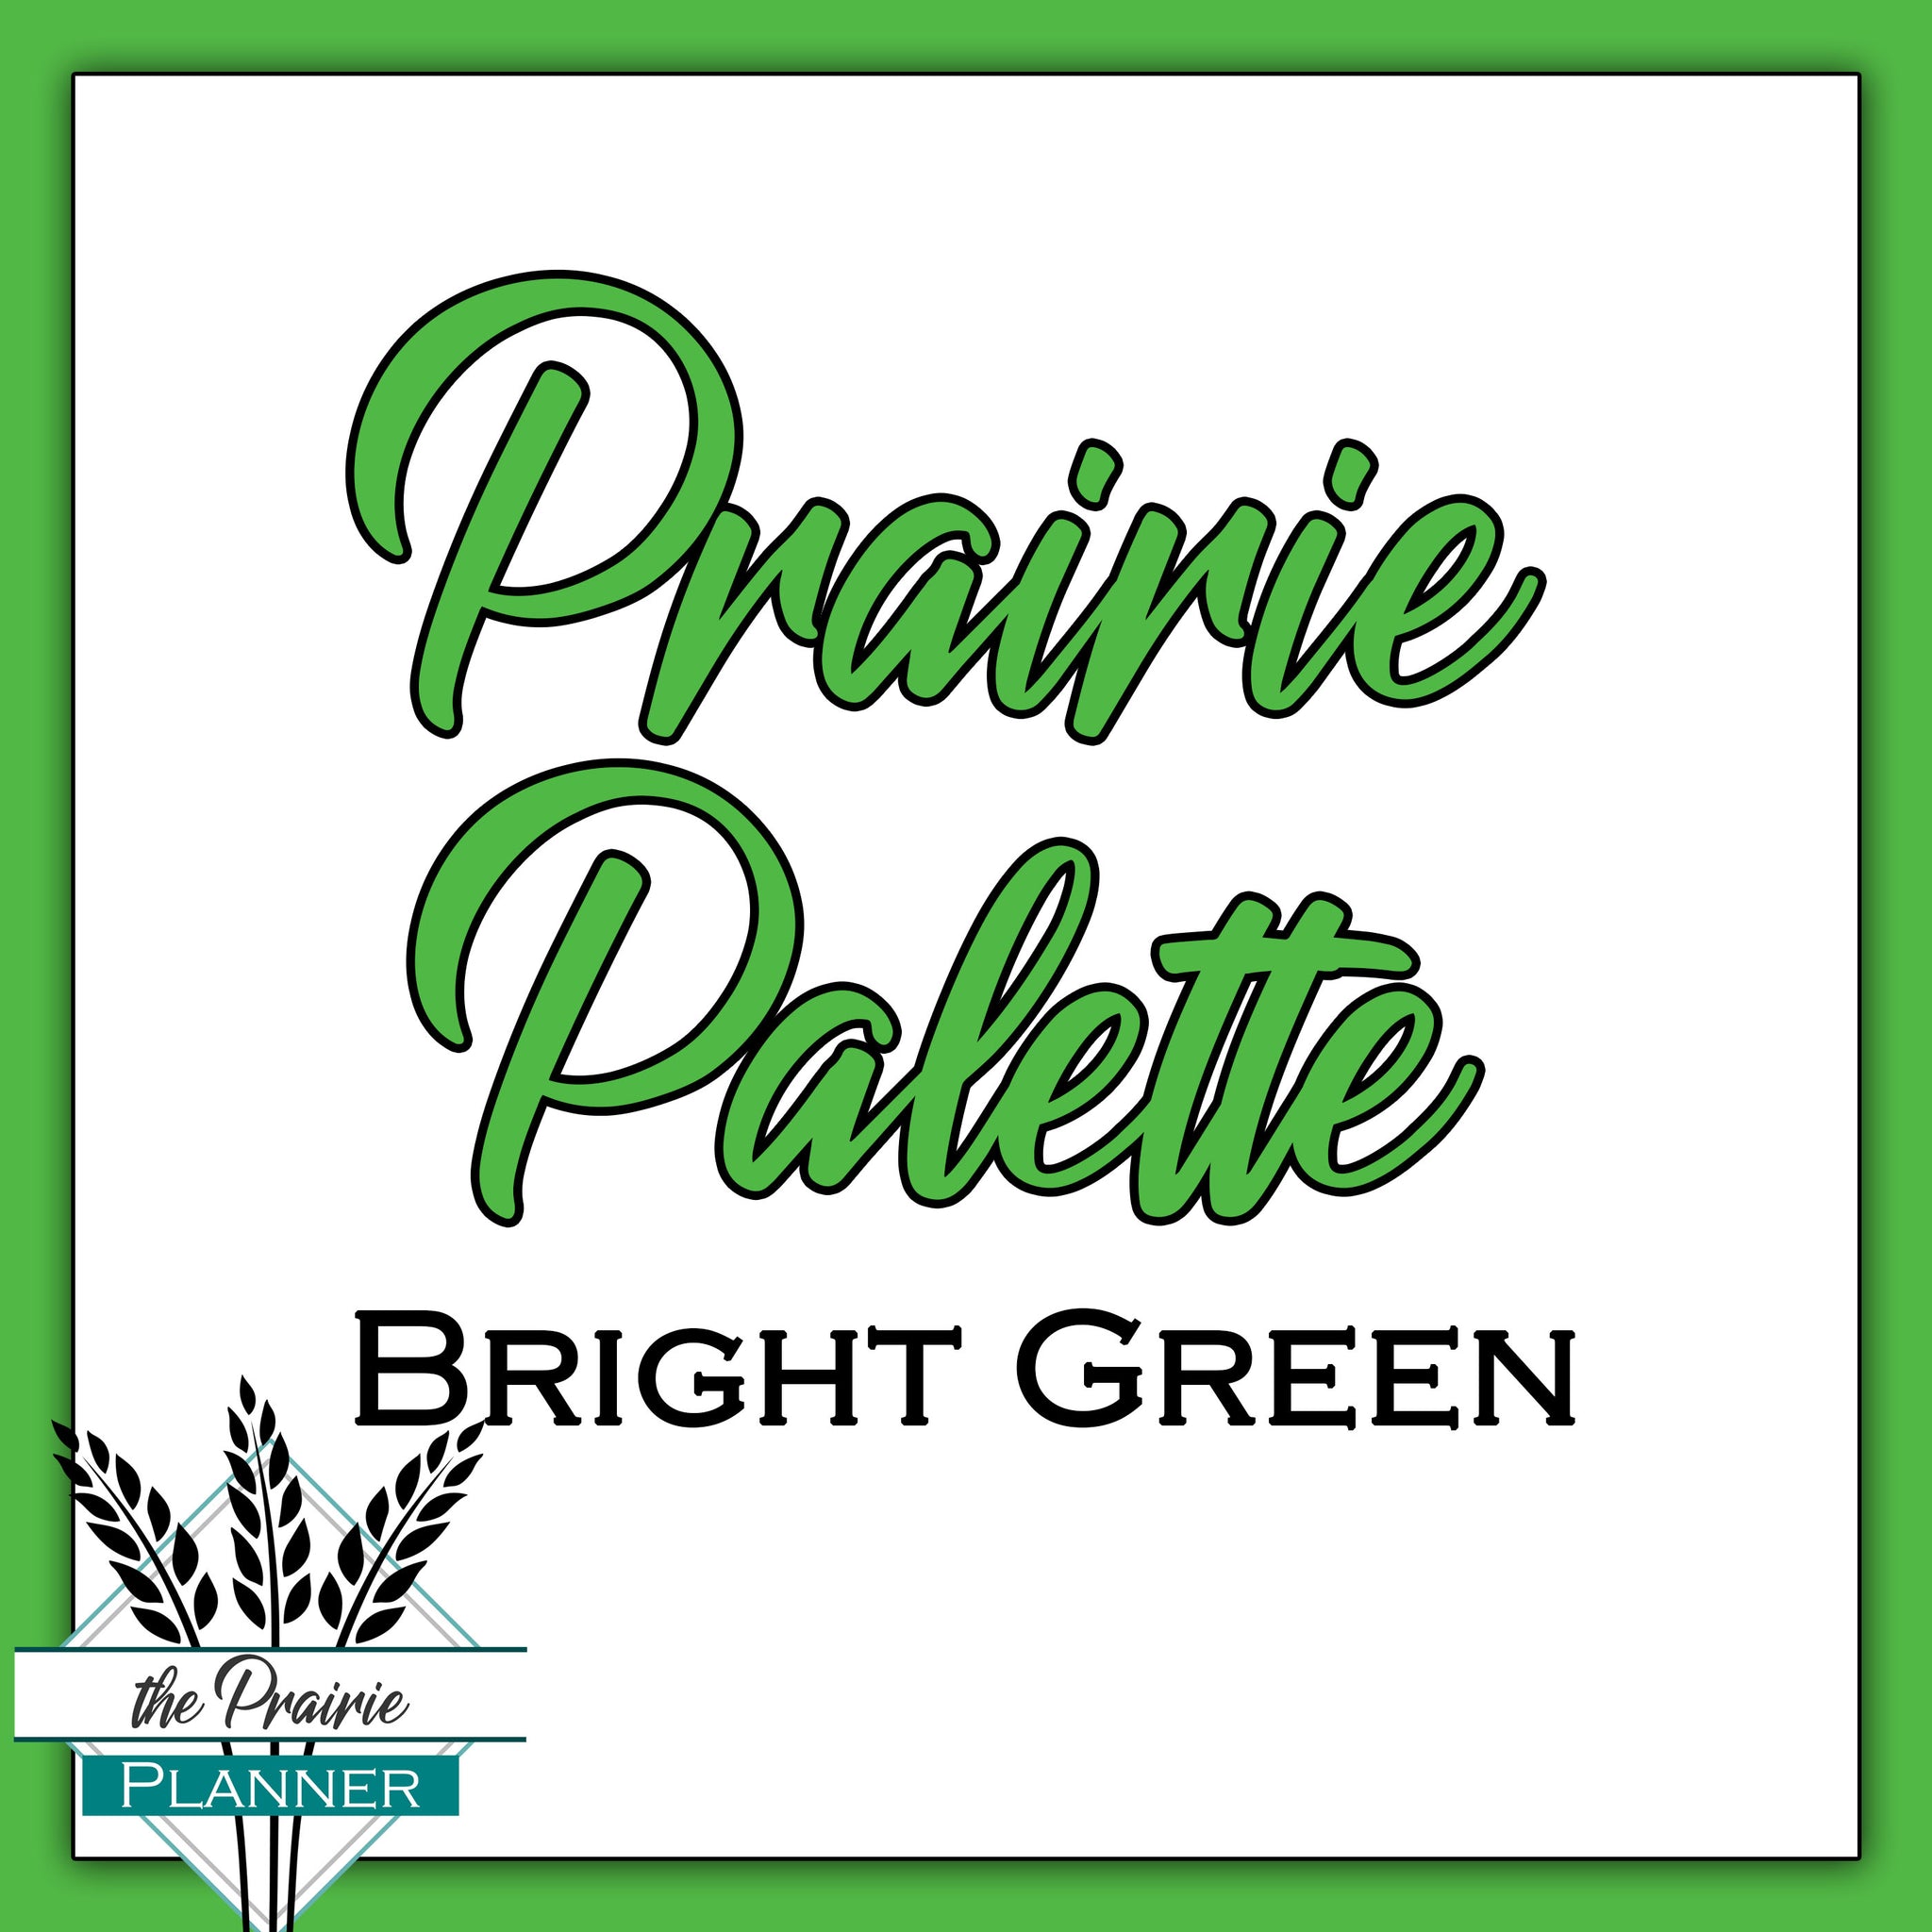 Prairie Palette - Bright Green